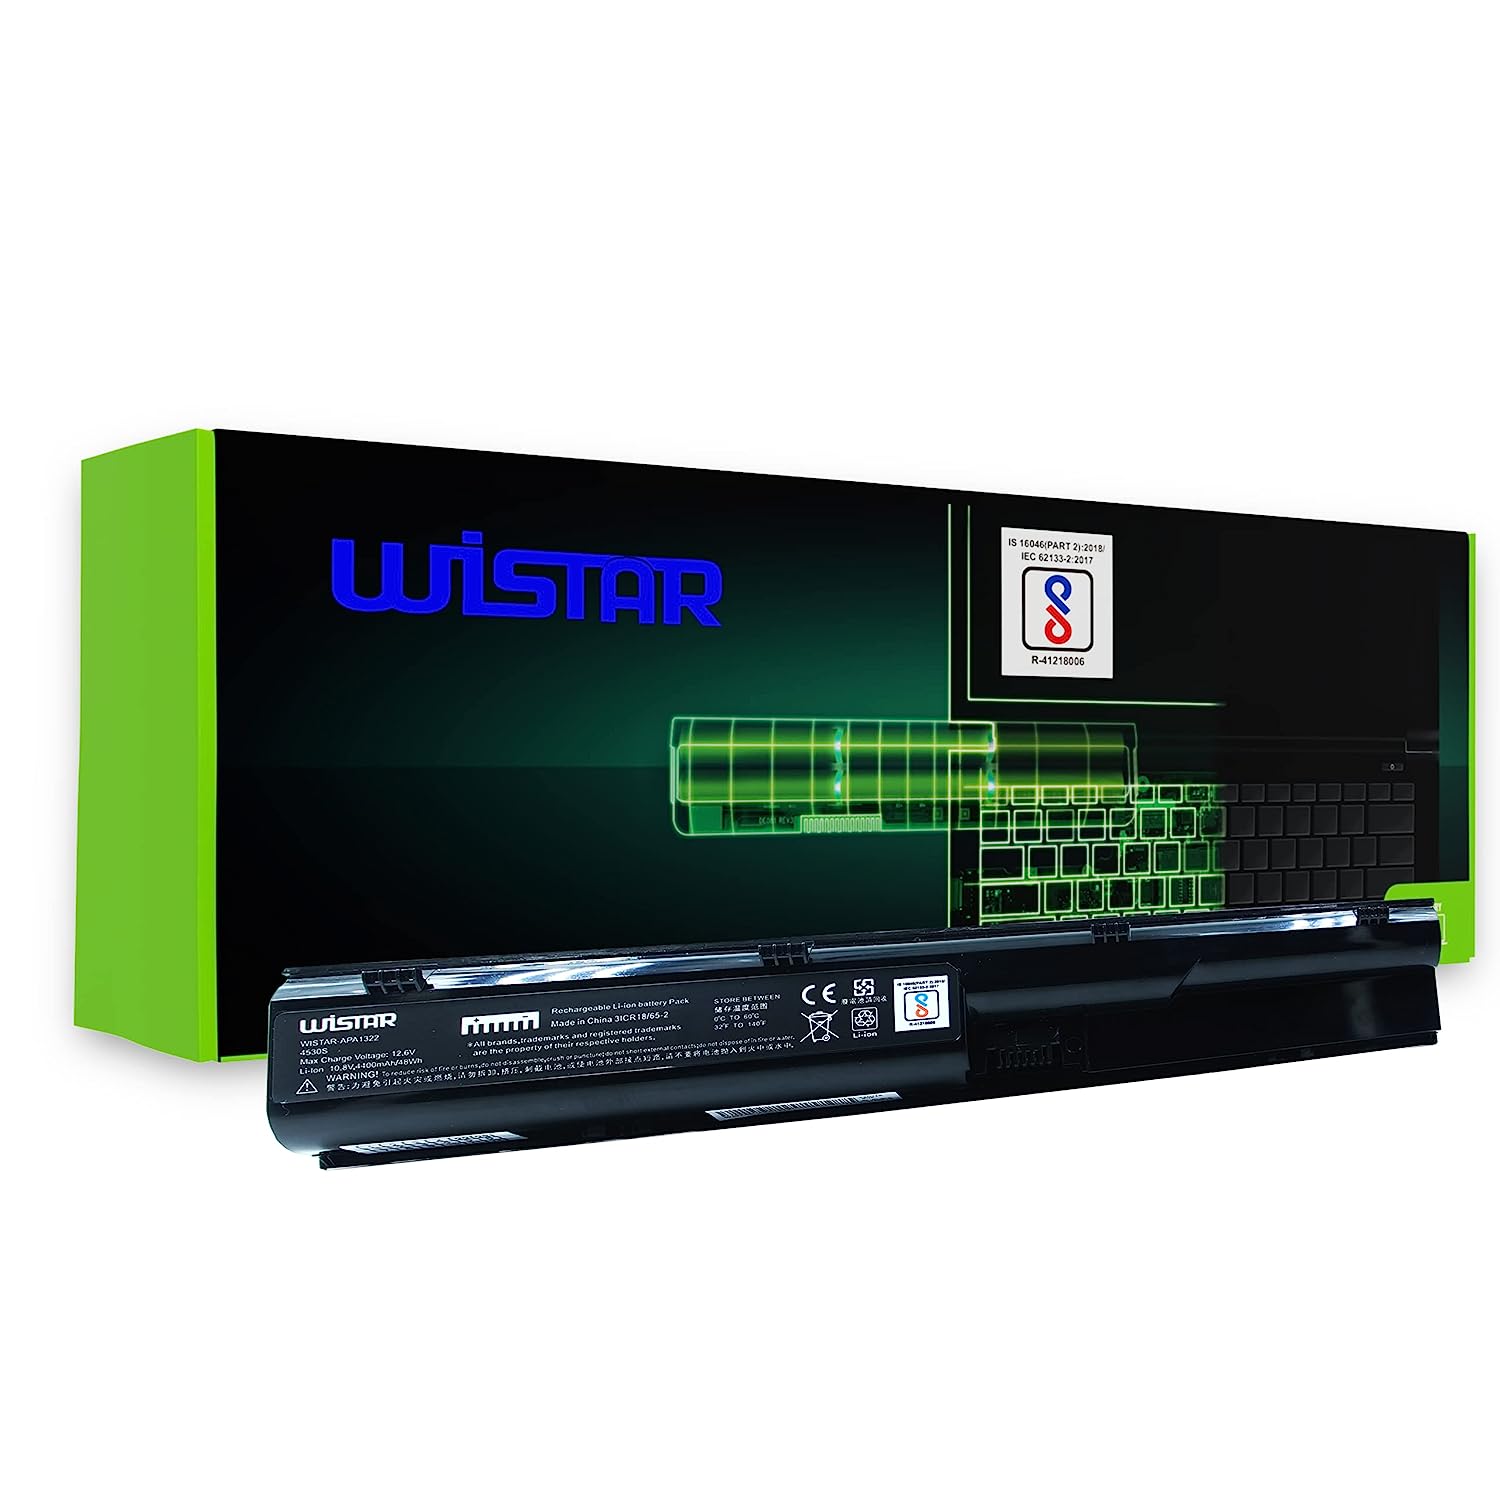 WISTAR Laptop Battery for HP probook 4530s 4431s 4330s 4331s 4430s 4435s 4436s 4530s 4535s 4730s